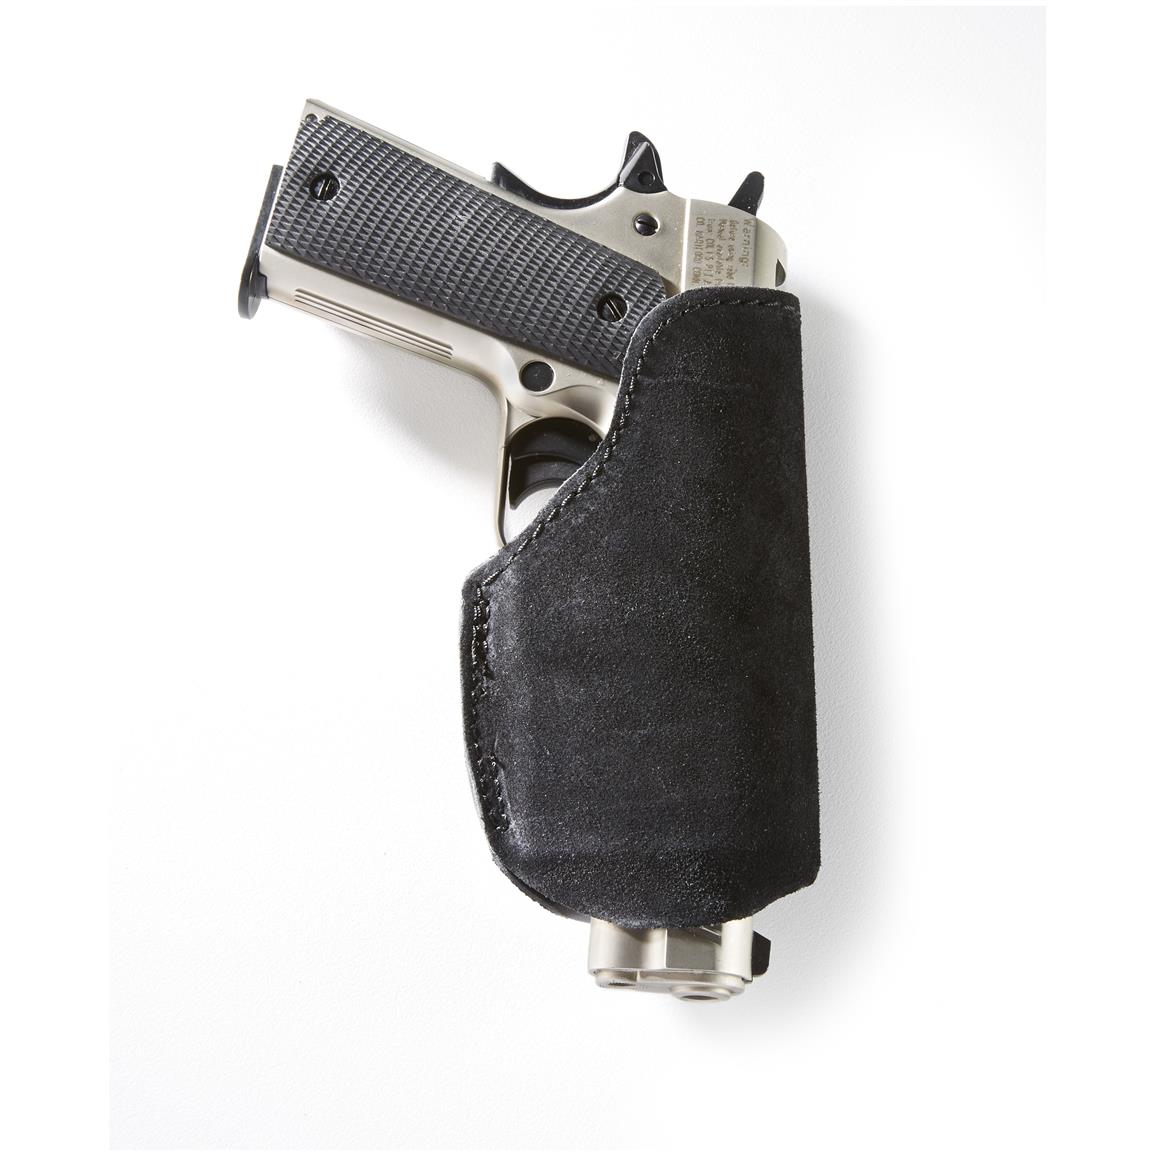 Glock 42 InsidethePocket Holster 623329, Fitted Holsters at